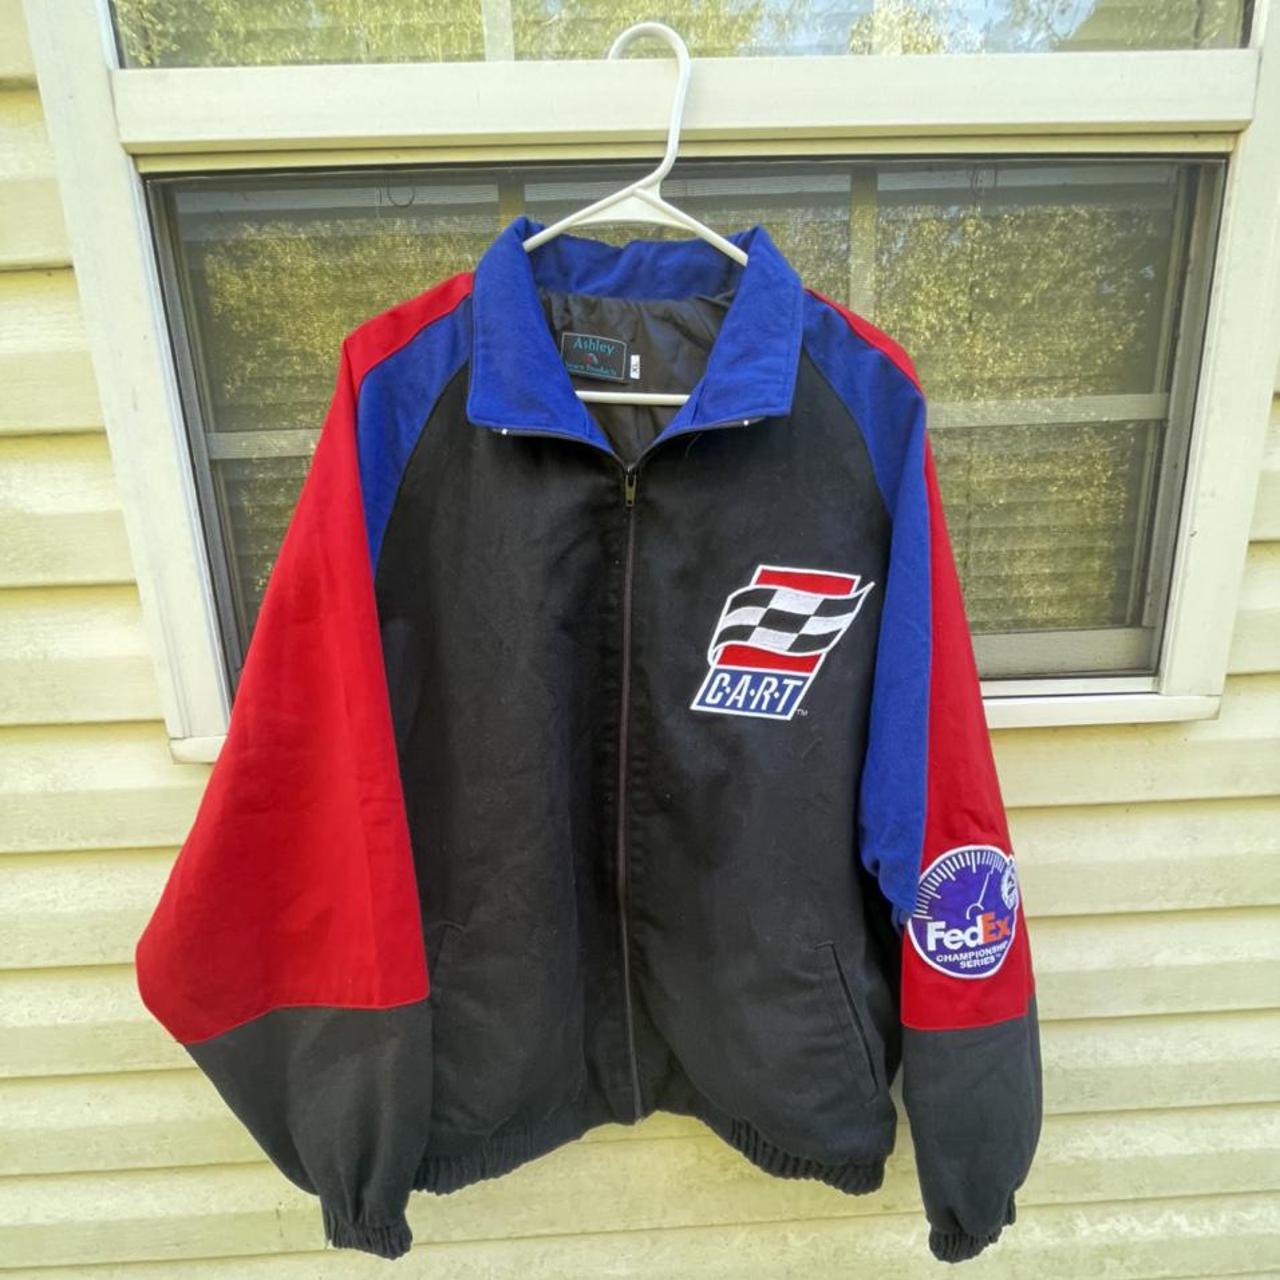 Vintage 90s Racer Jacket from Championship Series.... - Depop